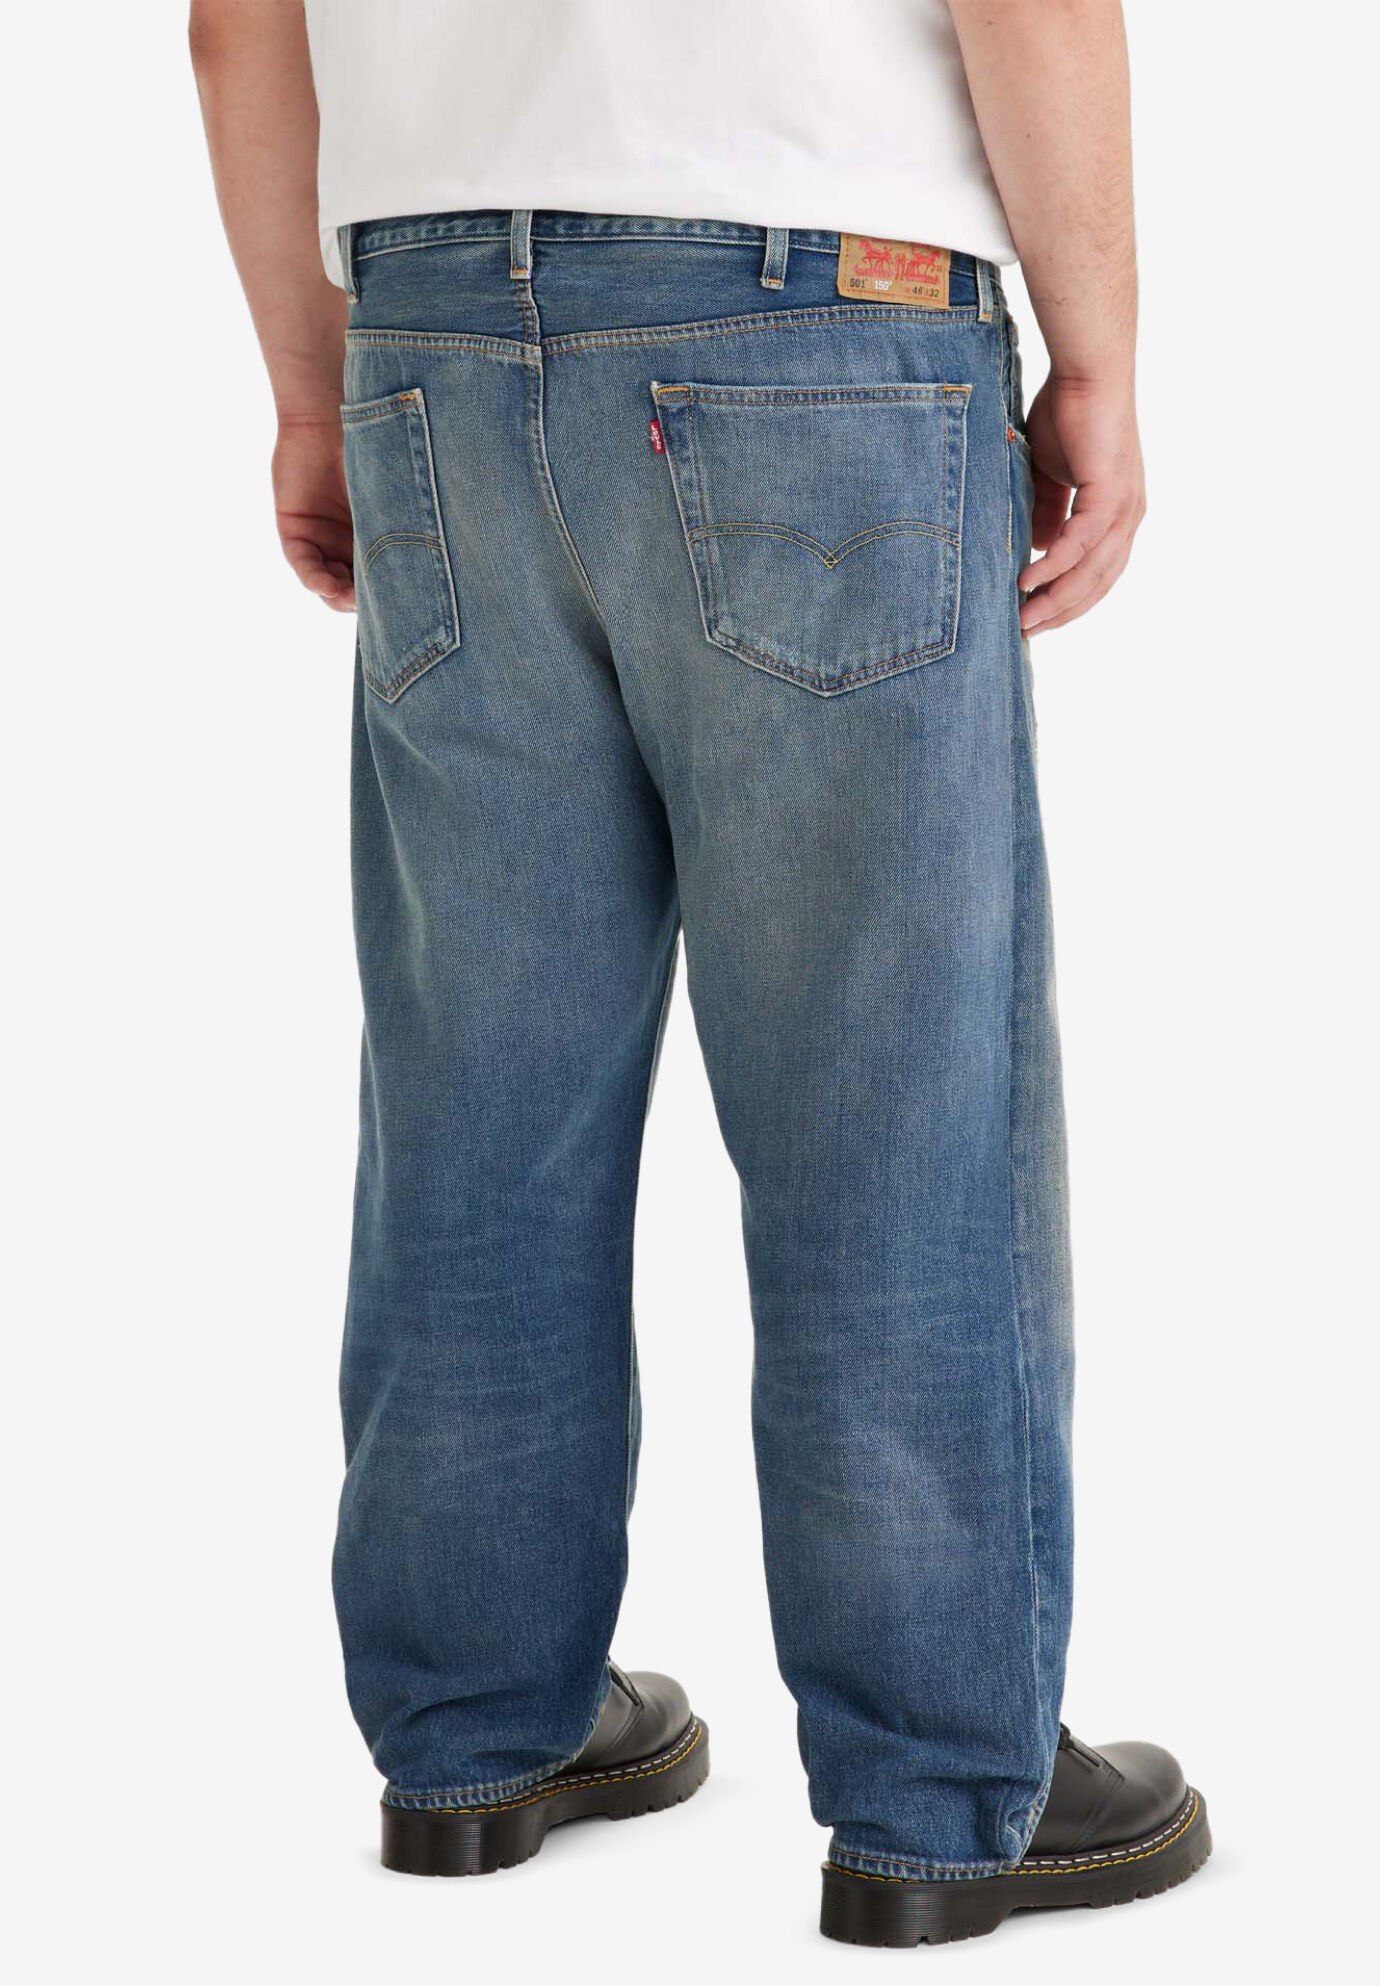 levis jeans stretch